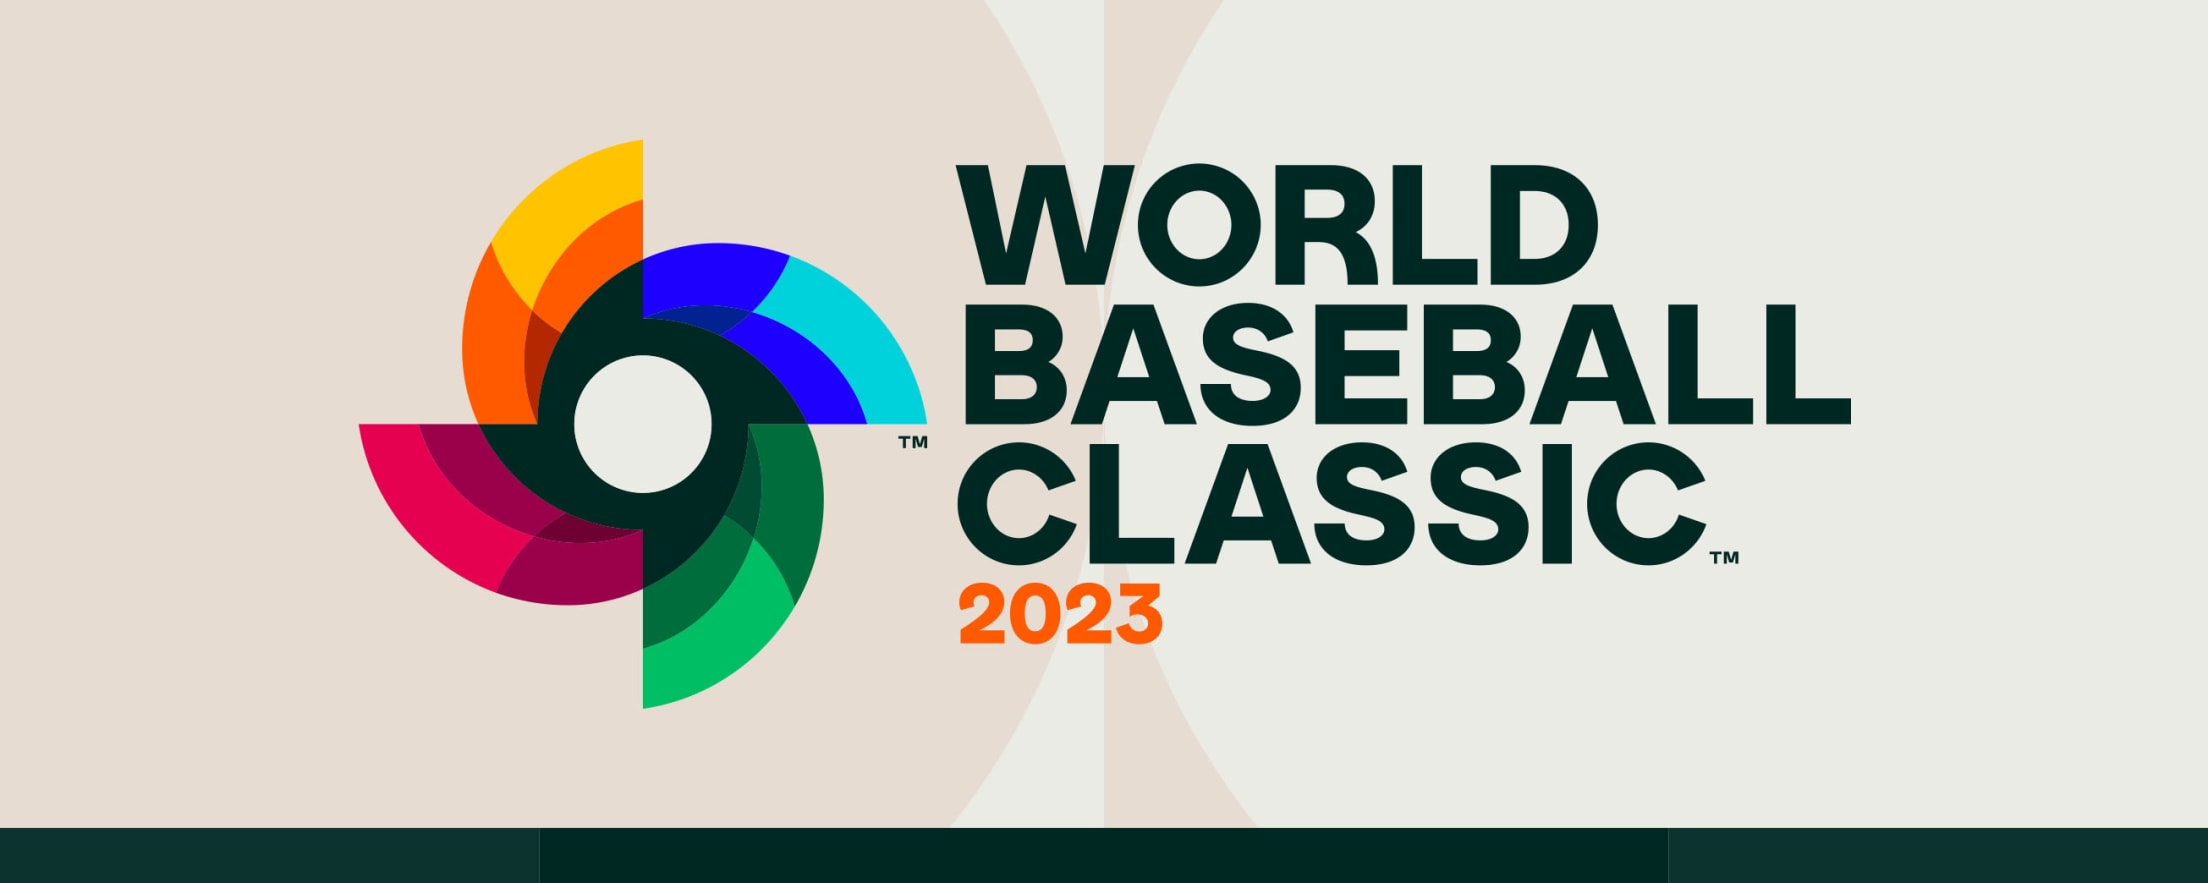 World Baseball Classic - 2023